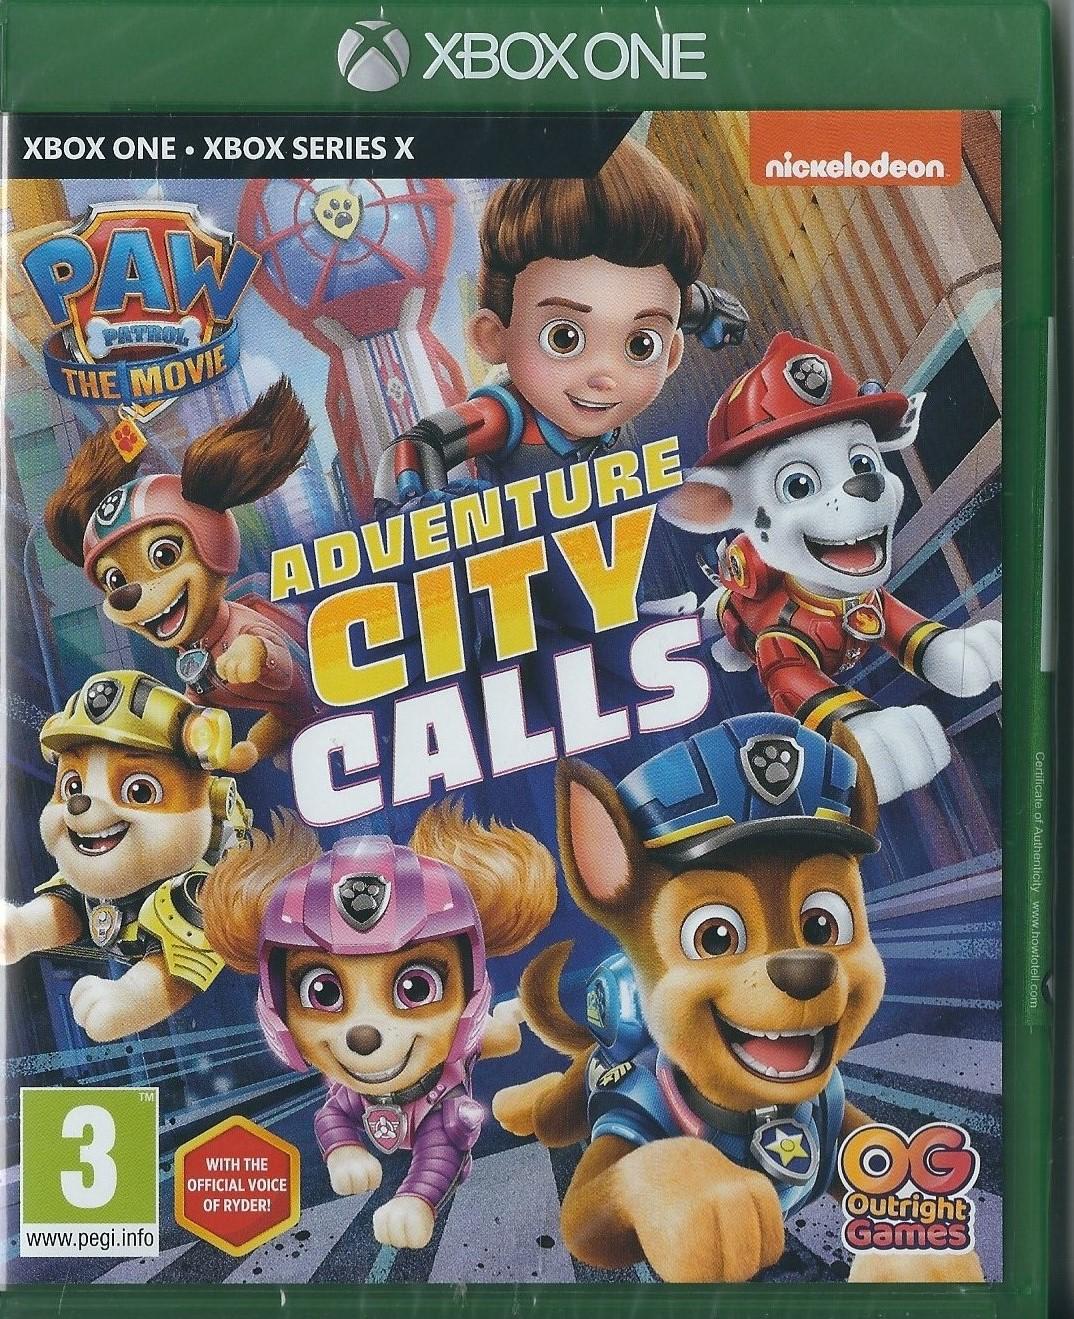 Xbox One / Series X PAW Patrol The Movie: Adventure City Calls (BRAND NEW)